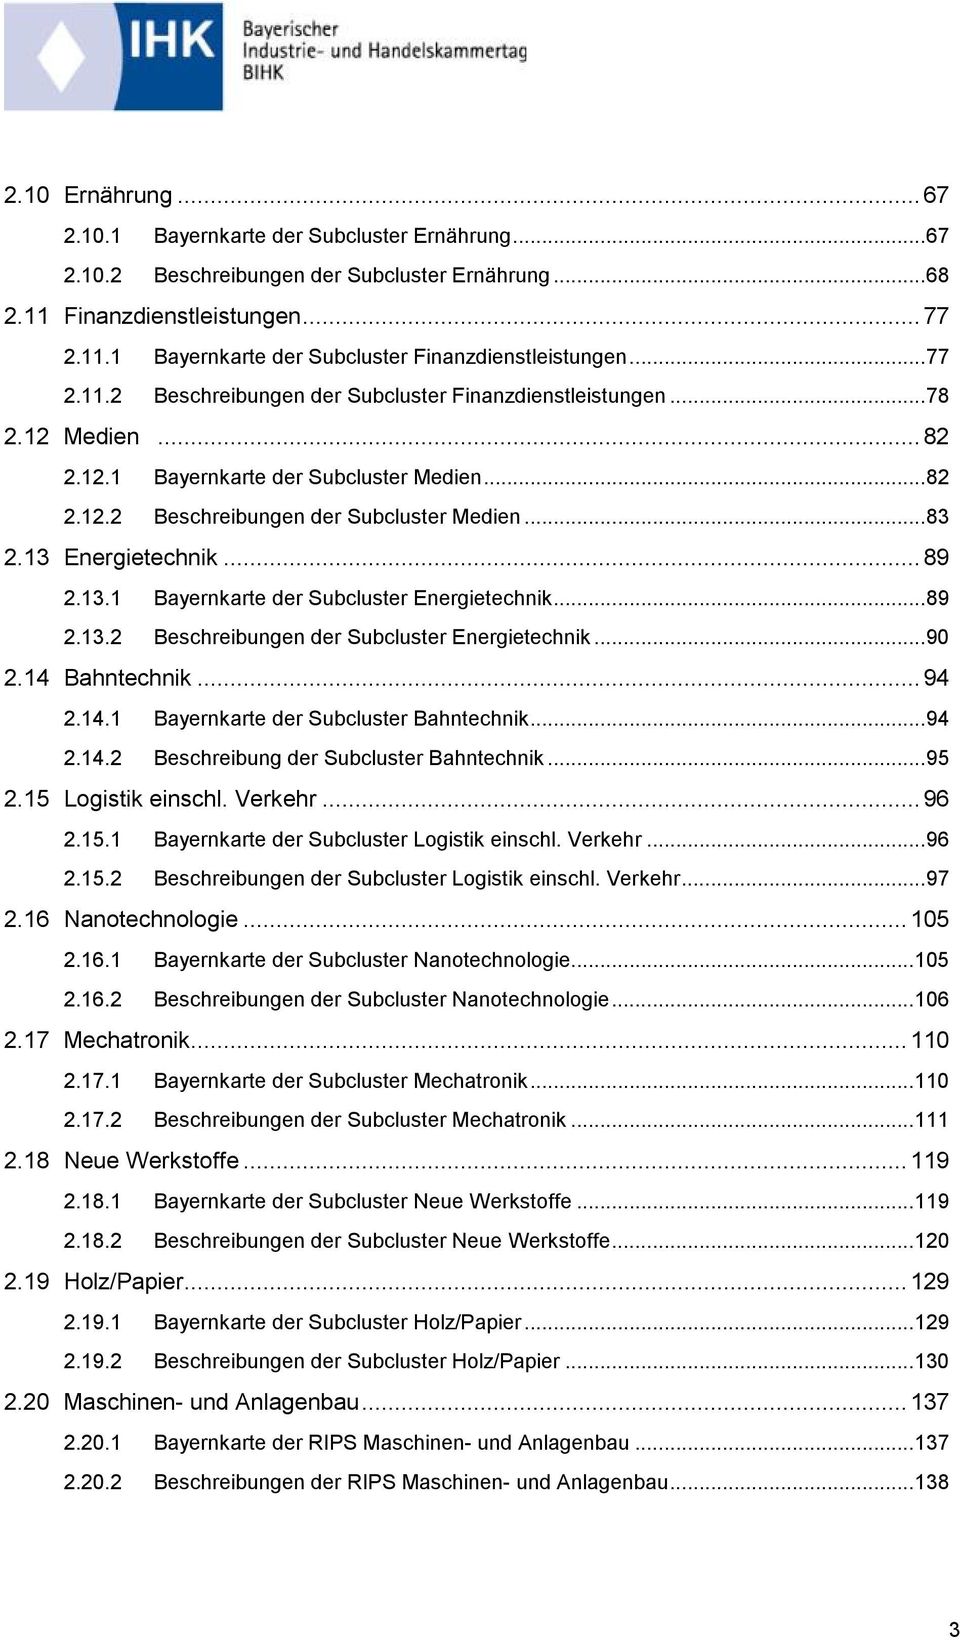 13 Energietechnik...89 2.13.1 Bayernkarte der Subcluster Energietechnik...89 2.13.2 Beschreibungen der Subcluster Energietechnik...90 2.14 Bahntechnik...94 2.14.1 Bayernkarte der Subcluster Bahntechnik.